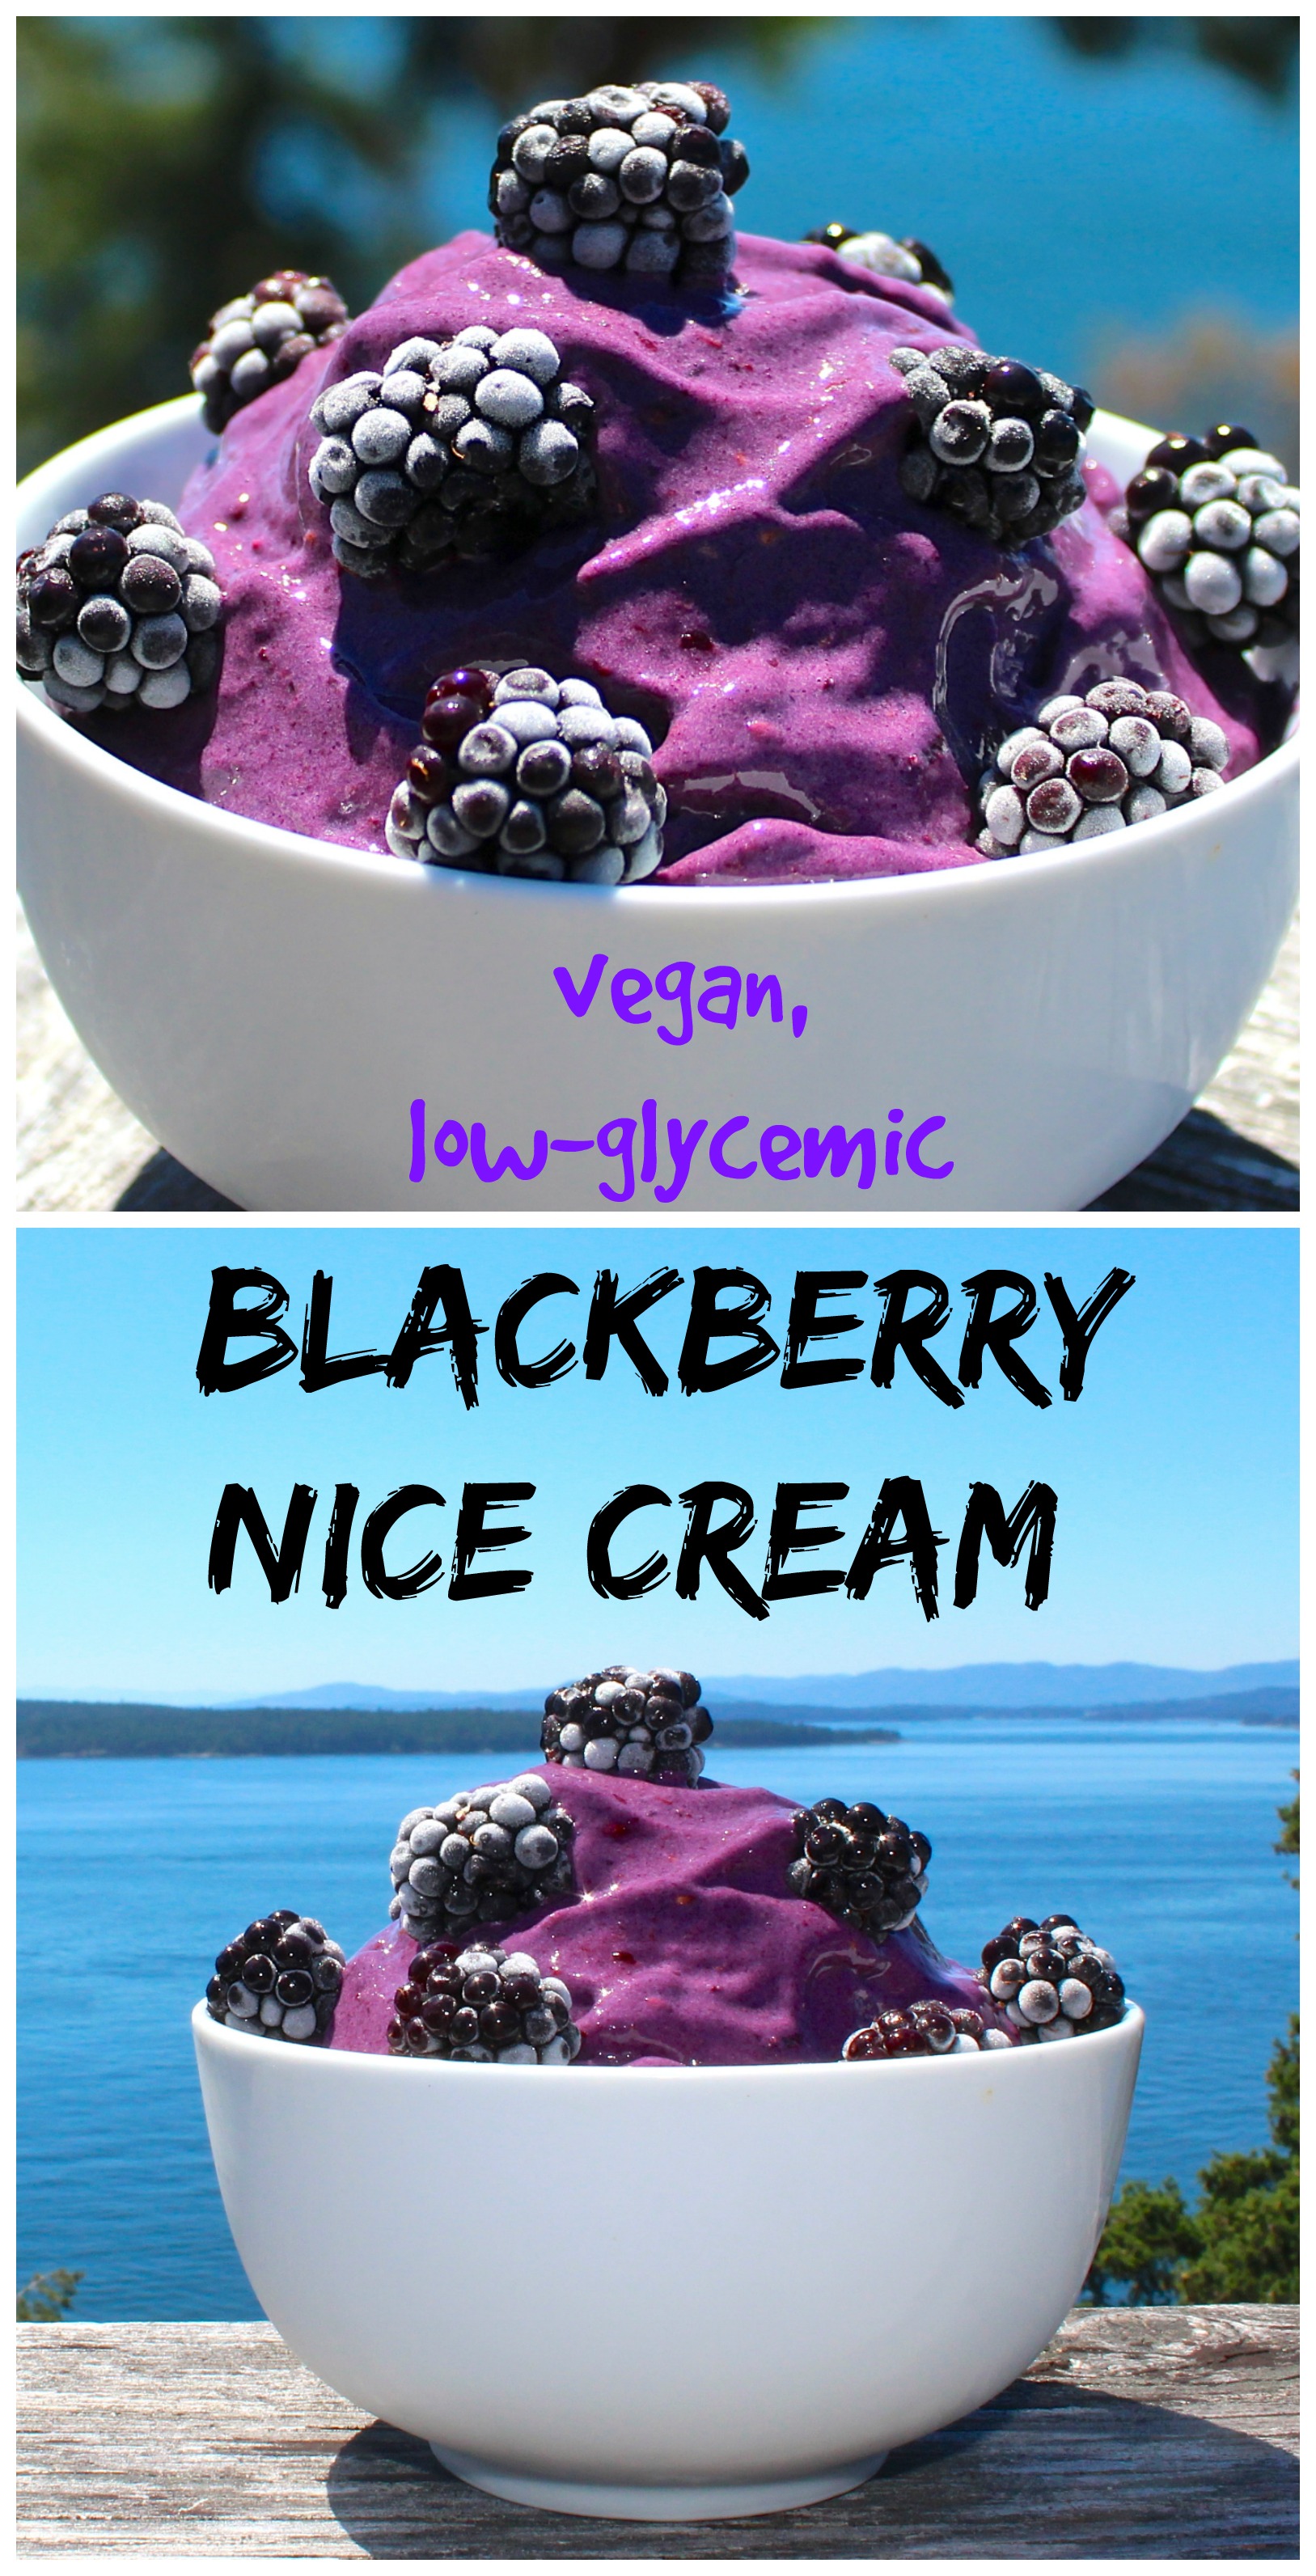 Vegan Low-glycemic Blackberry Nice Cream